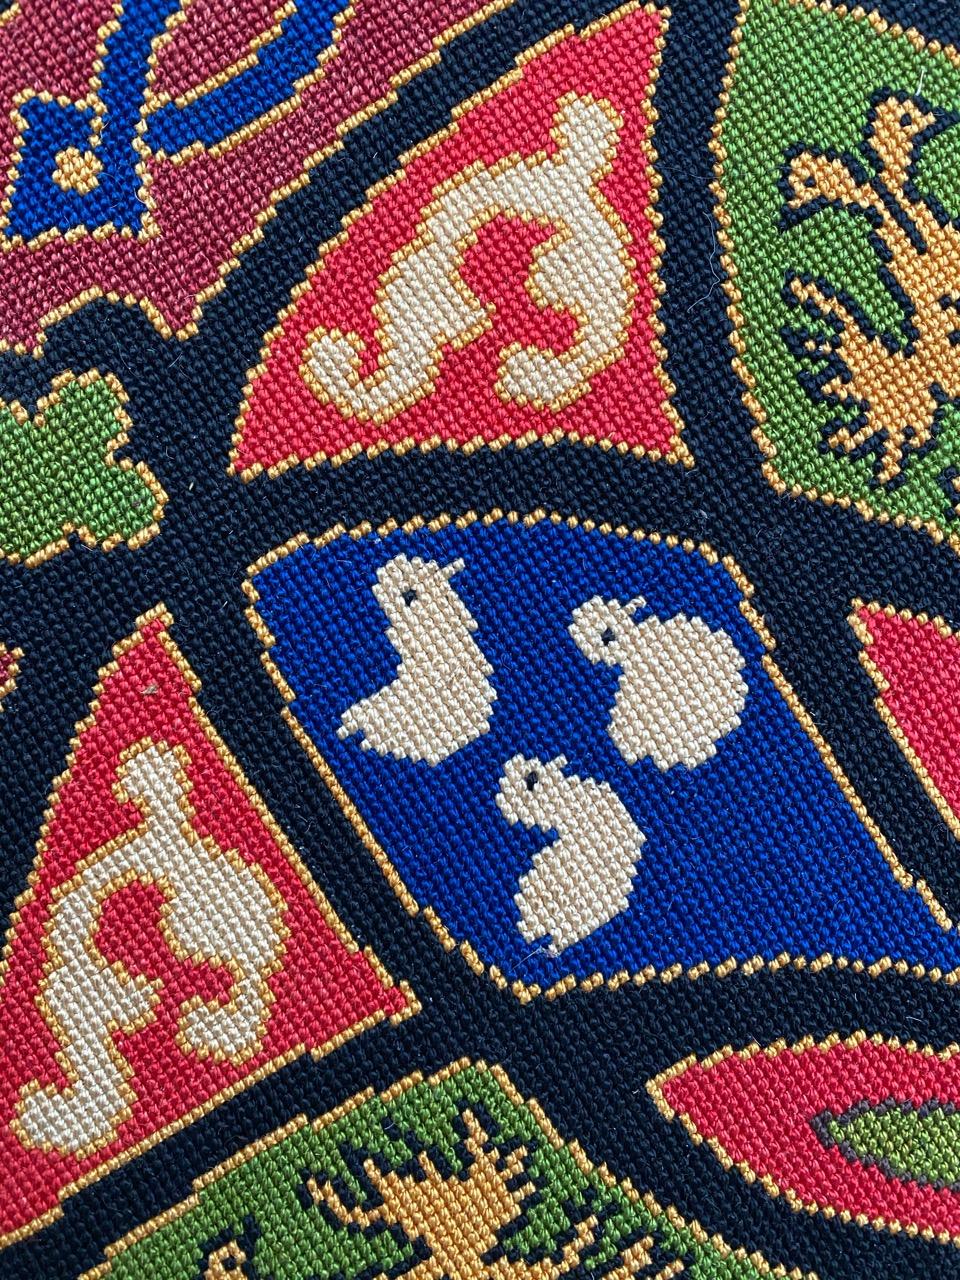 Aubusson Bobyrug's Beautiful Antique French Needlepoint Round Tapestry (Tapisserie à l'aiguille française ancienne) en vente